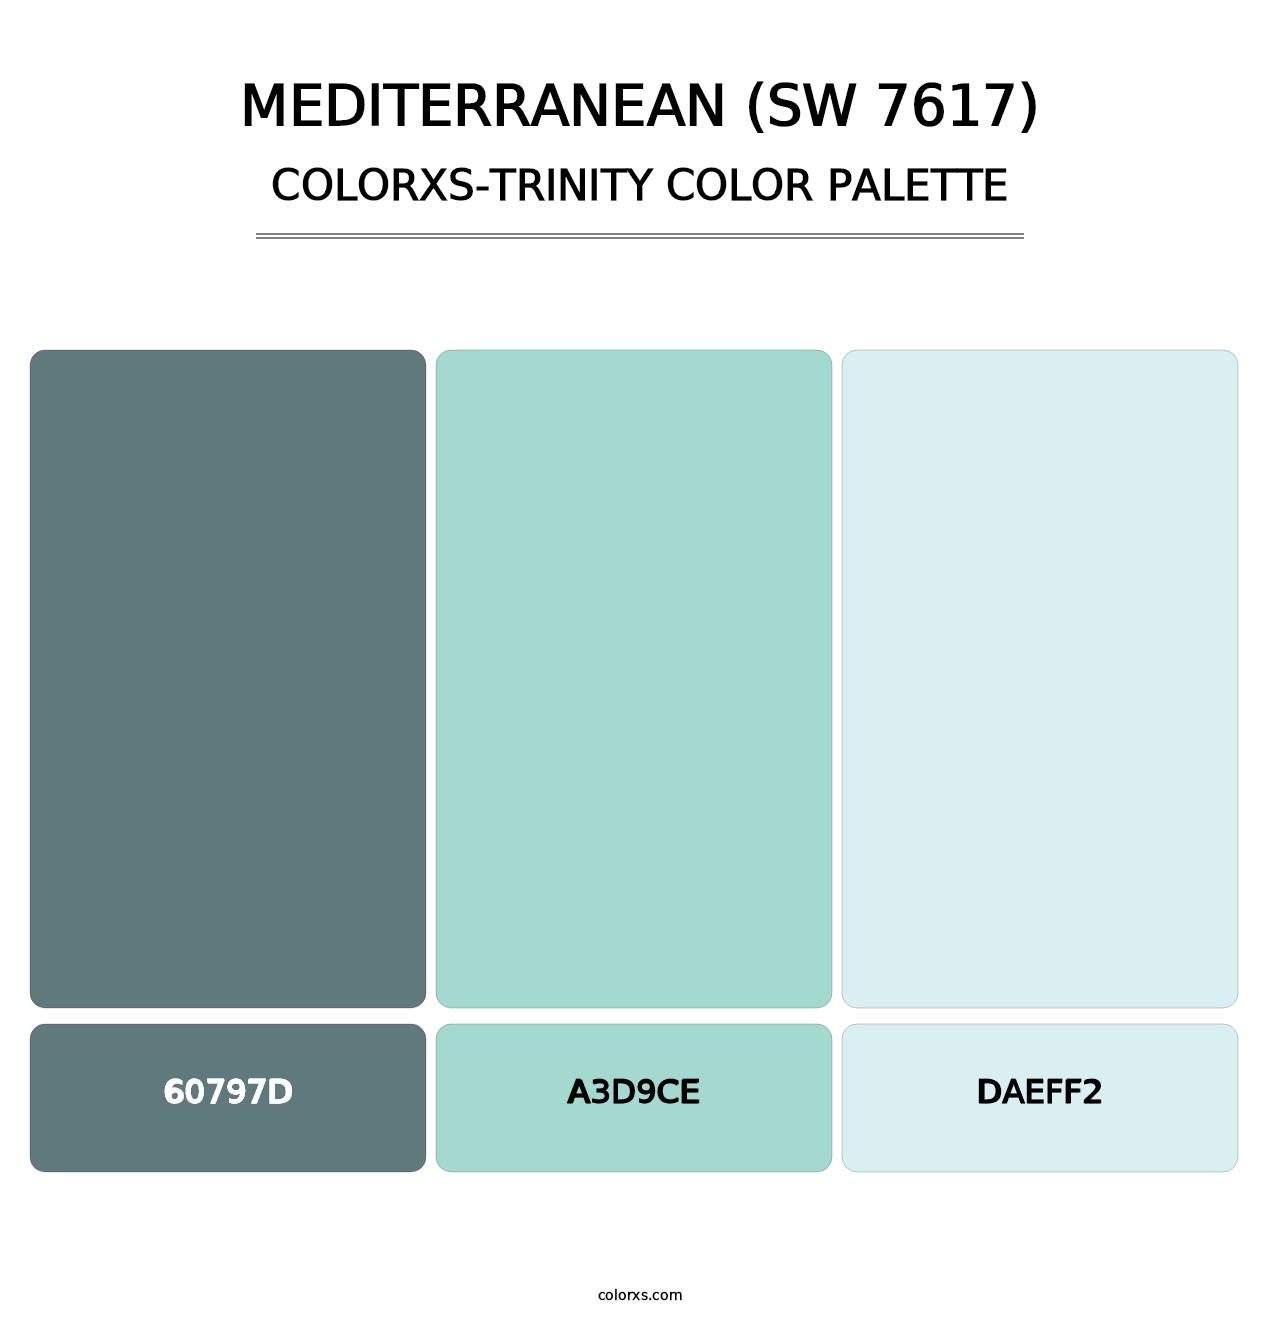 Mediterranean (SW 7617) - Colorxs Trinity Palette